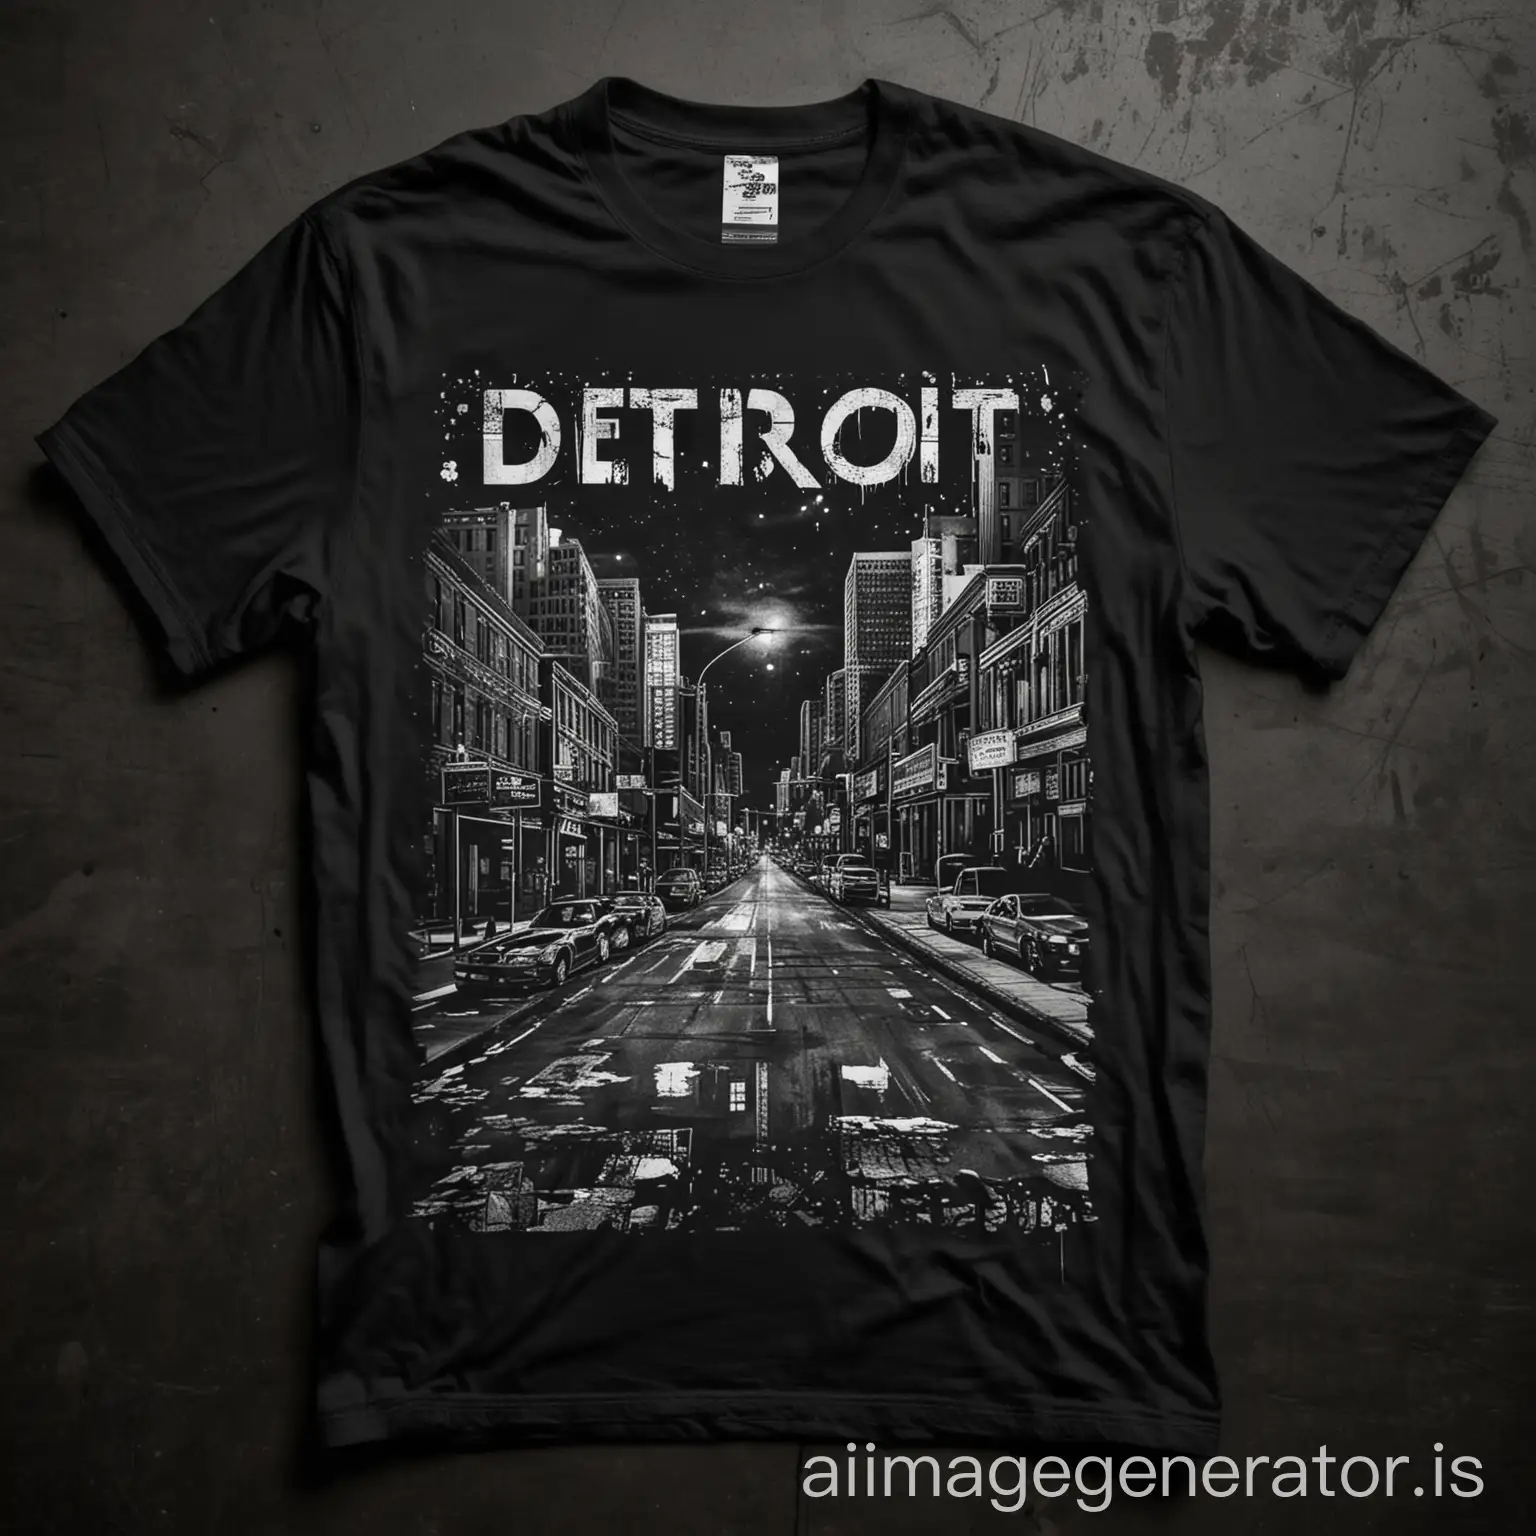 Vibrant-Detroit-Street-Life-Depicted-on-a-Stylish-Black-TShirt